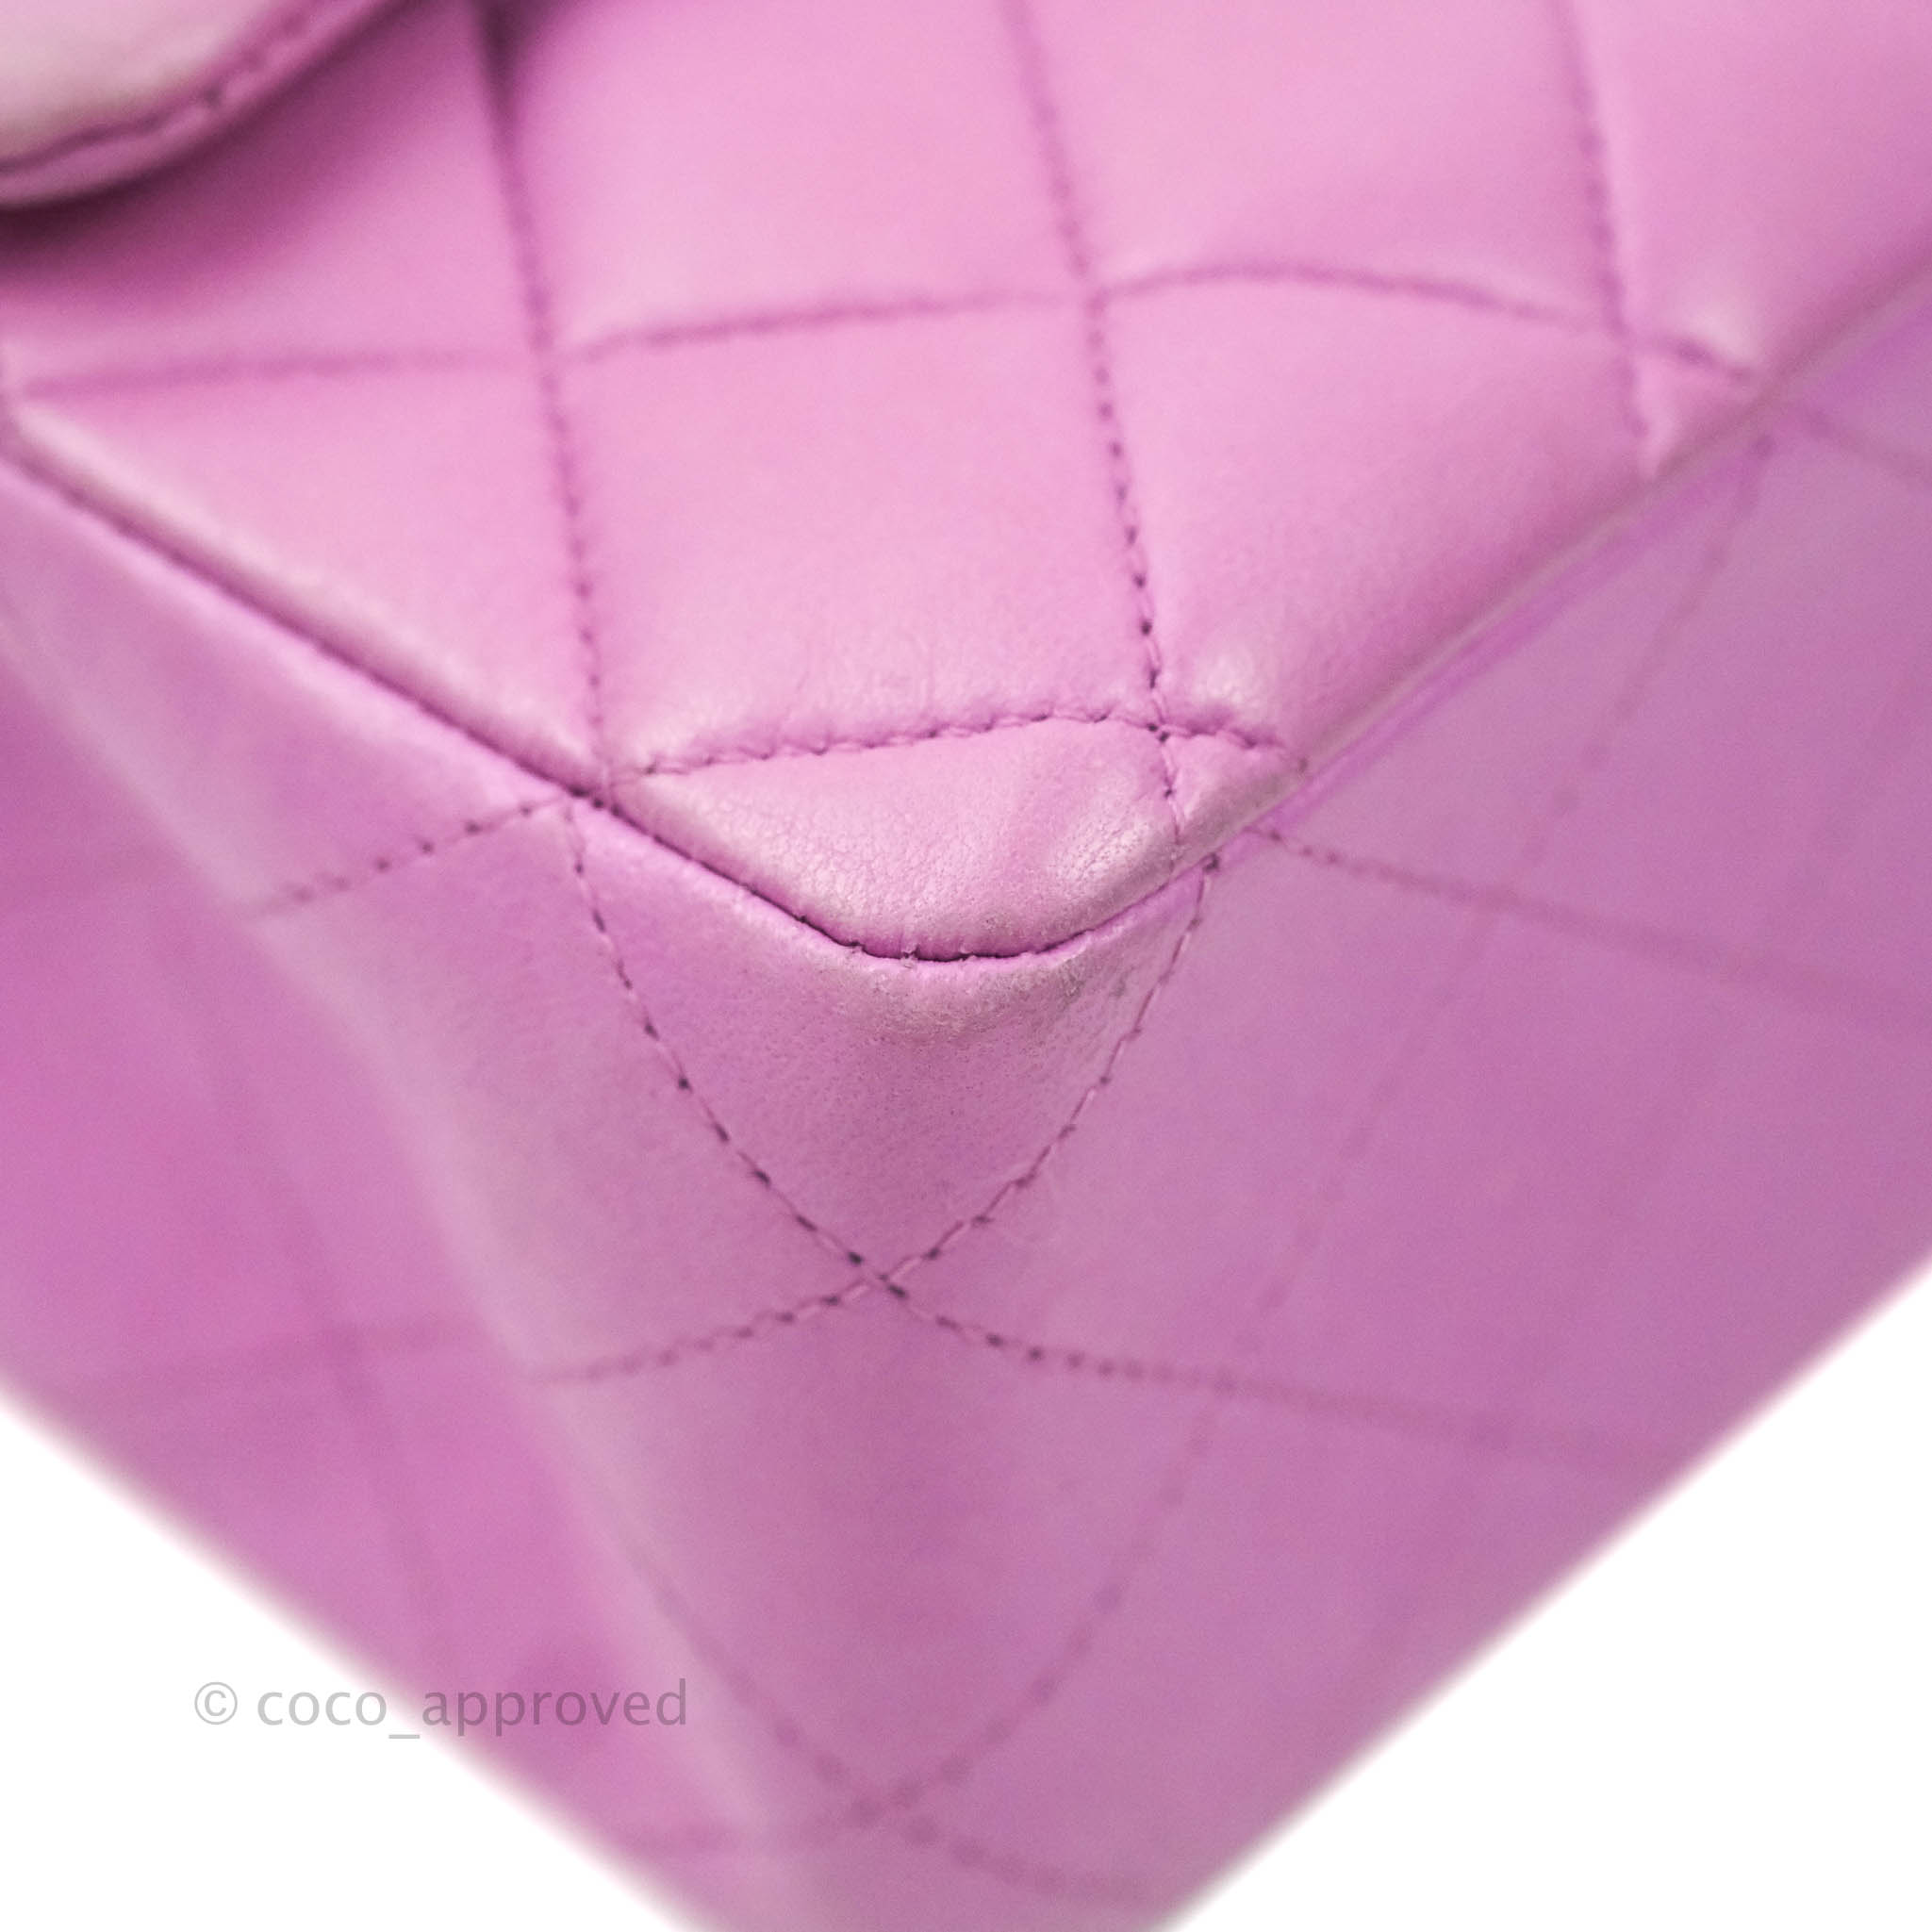 CHANEL Tweed Top Handle Vanity Case Purple 1264948